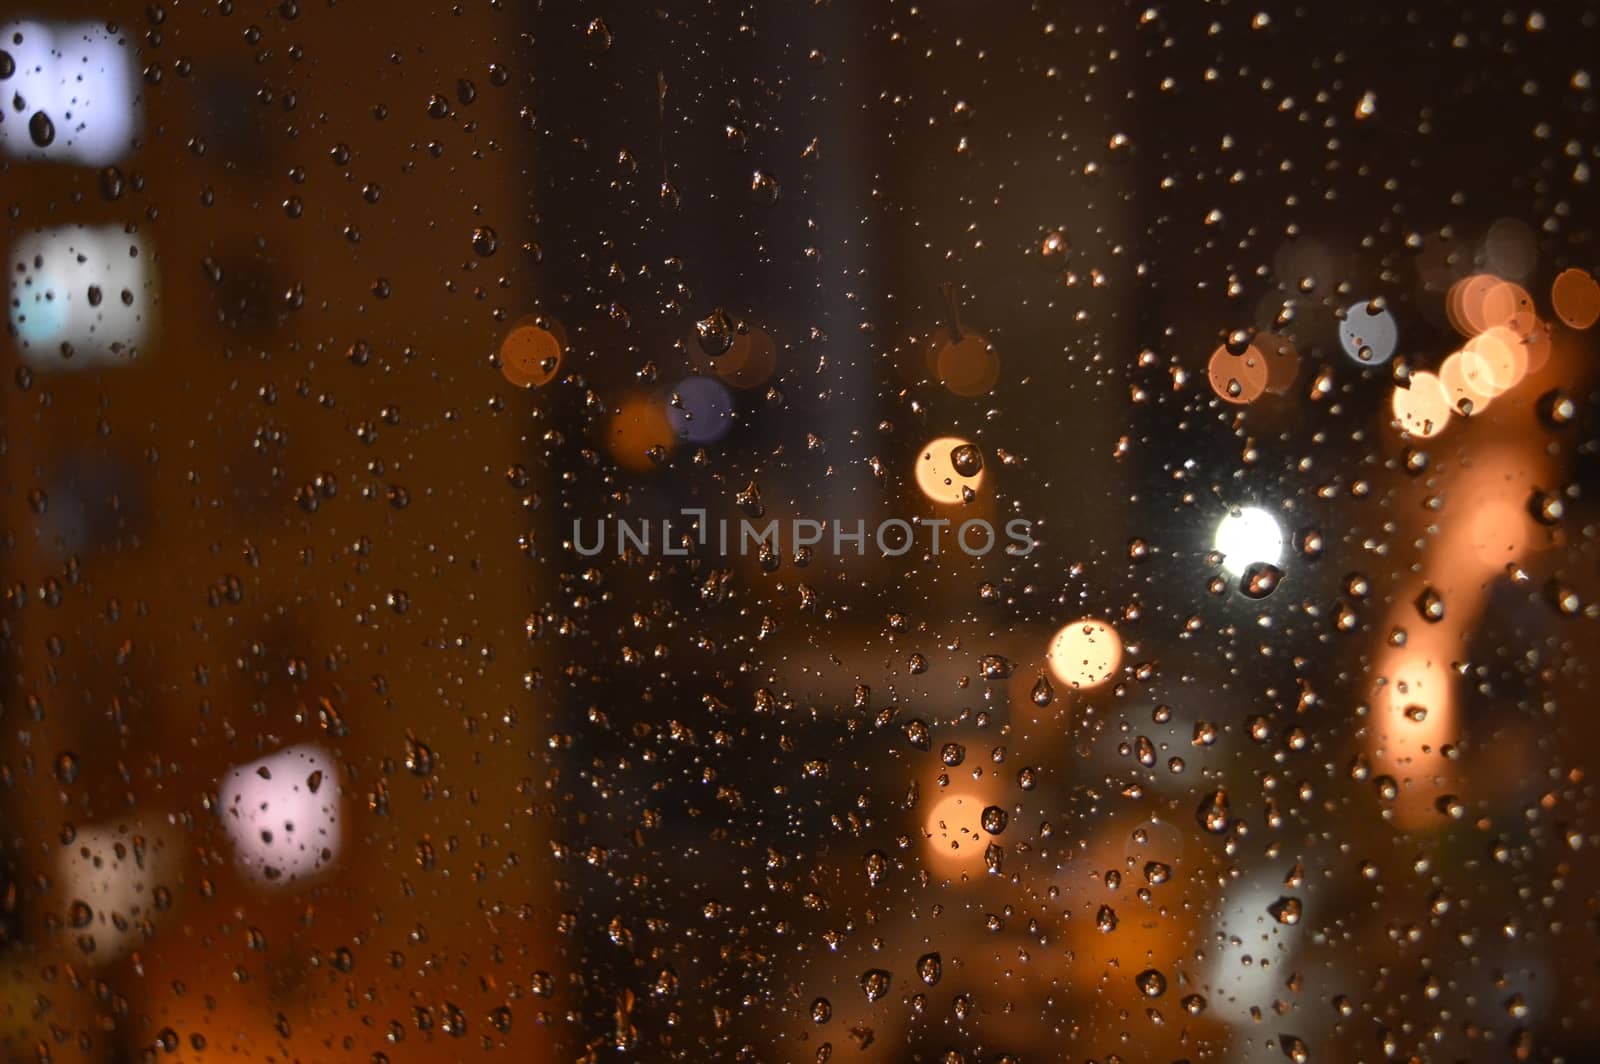 Rain drops on night window, shallow dof